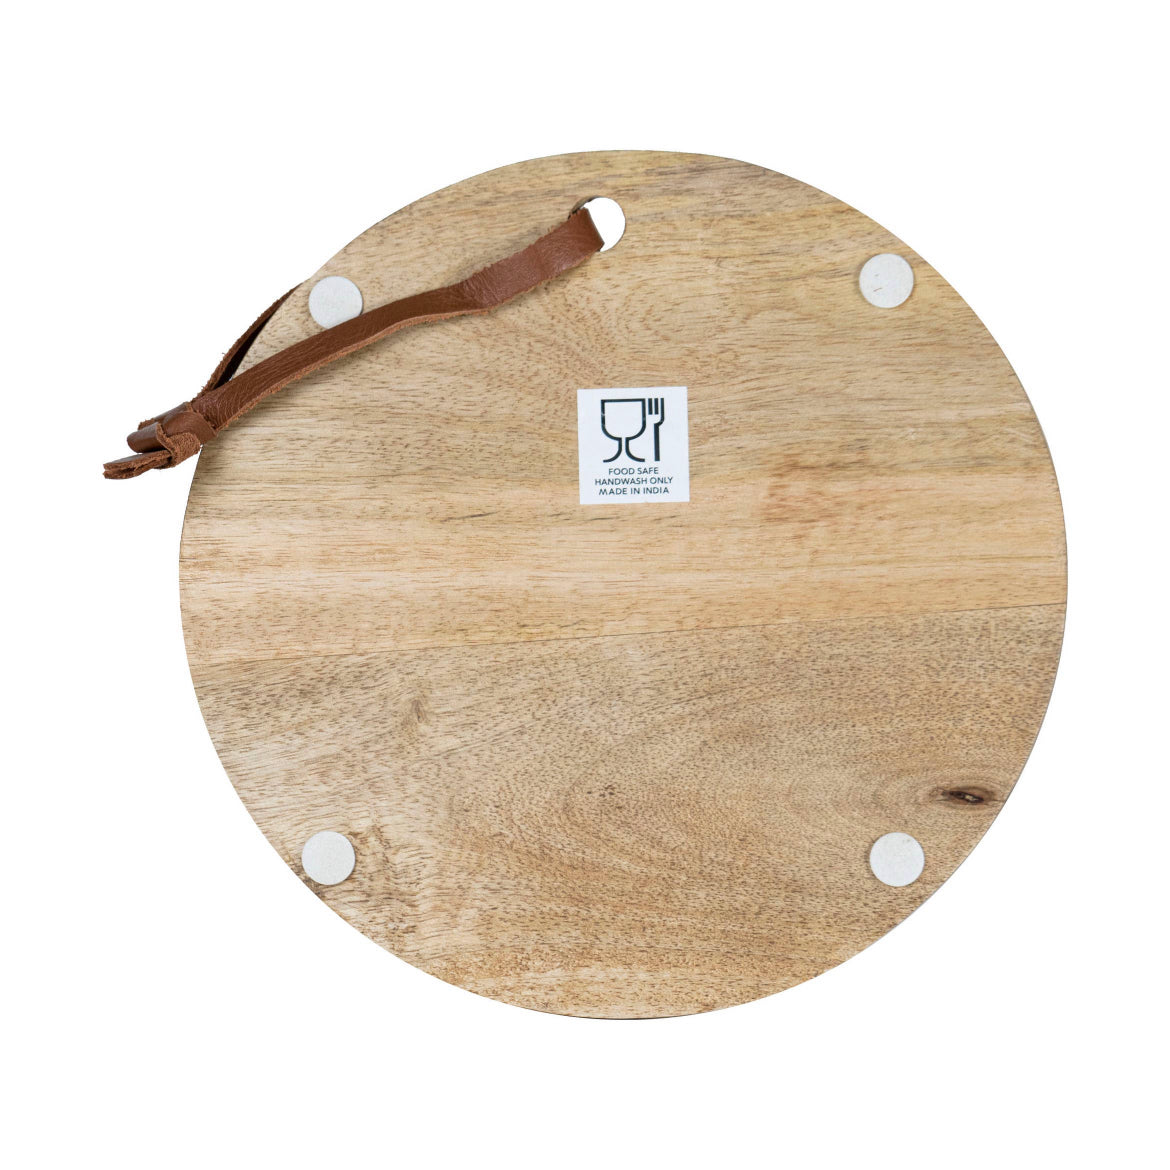 Mini Wooden Charcuterie/Cutting Board